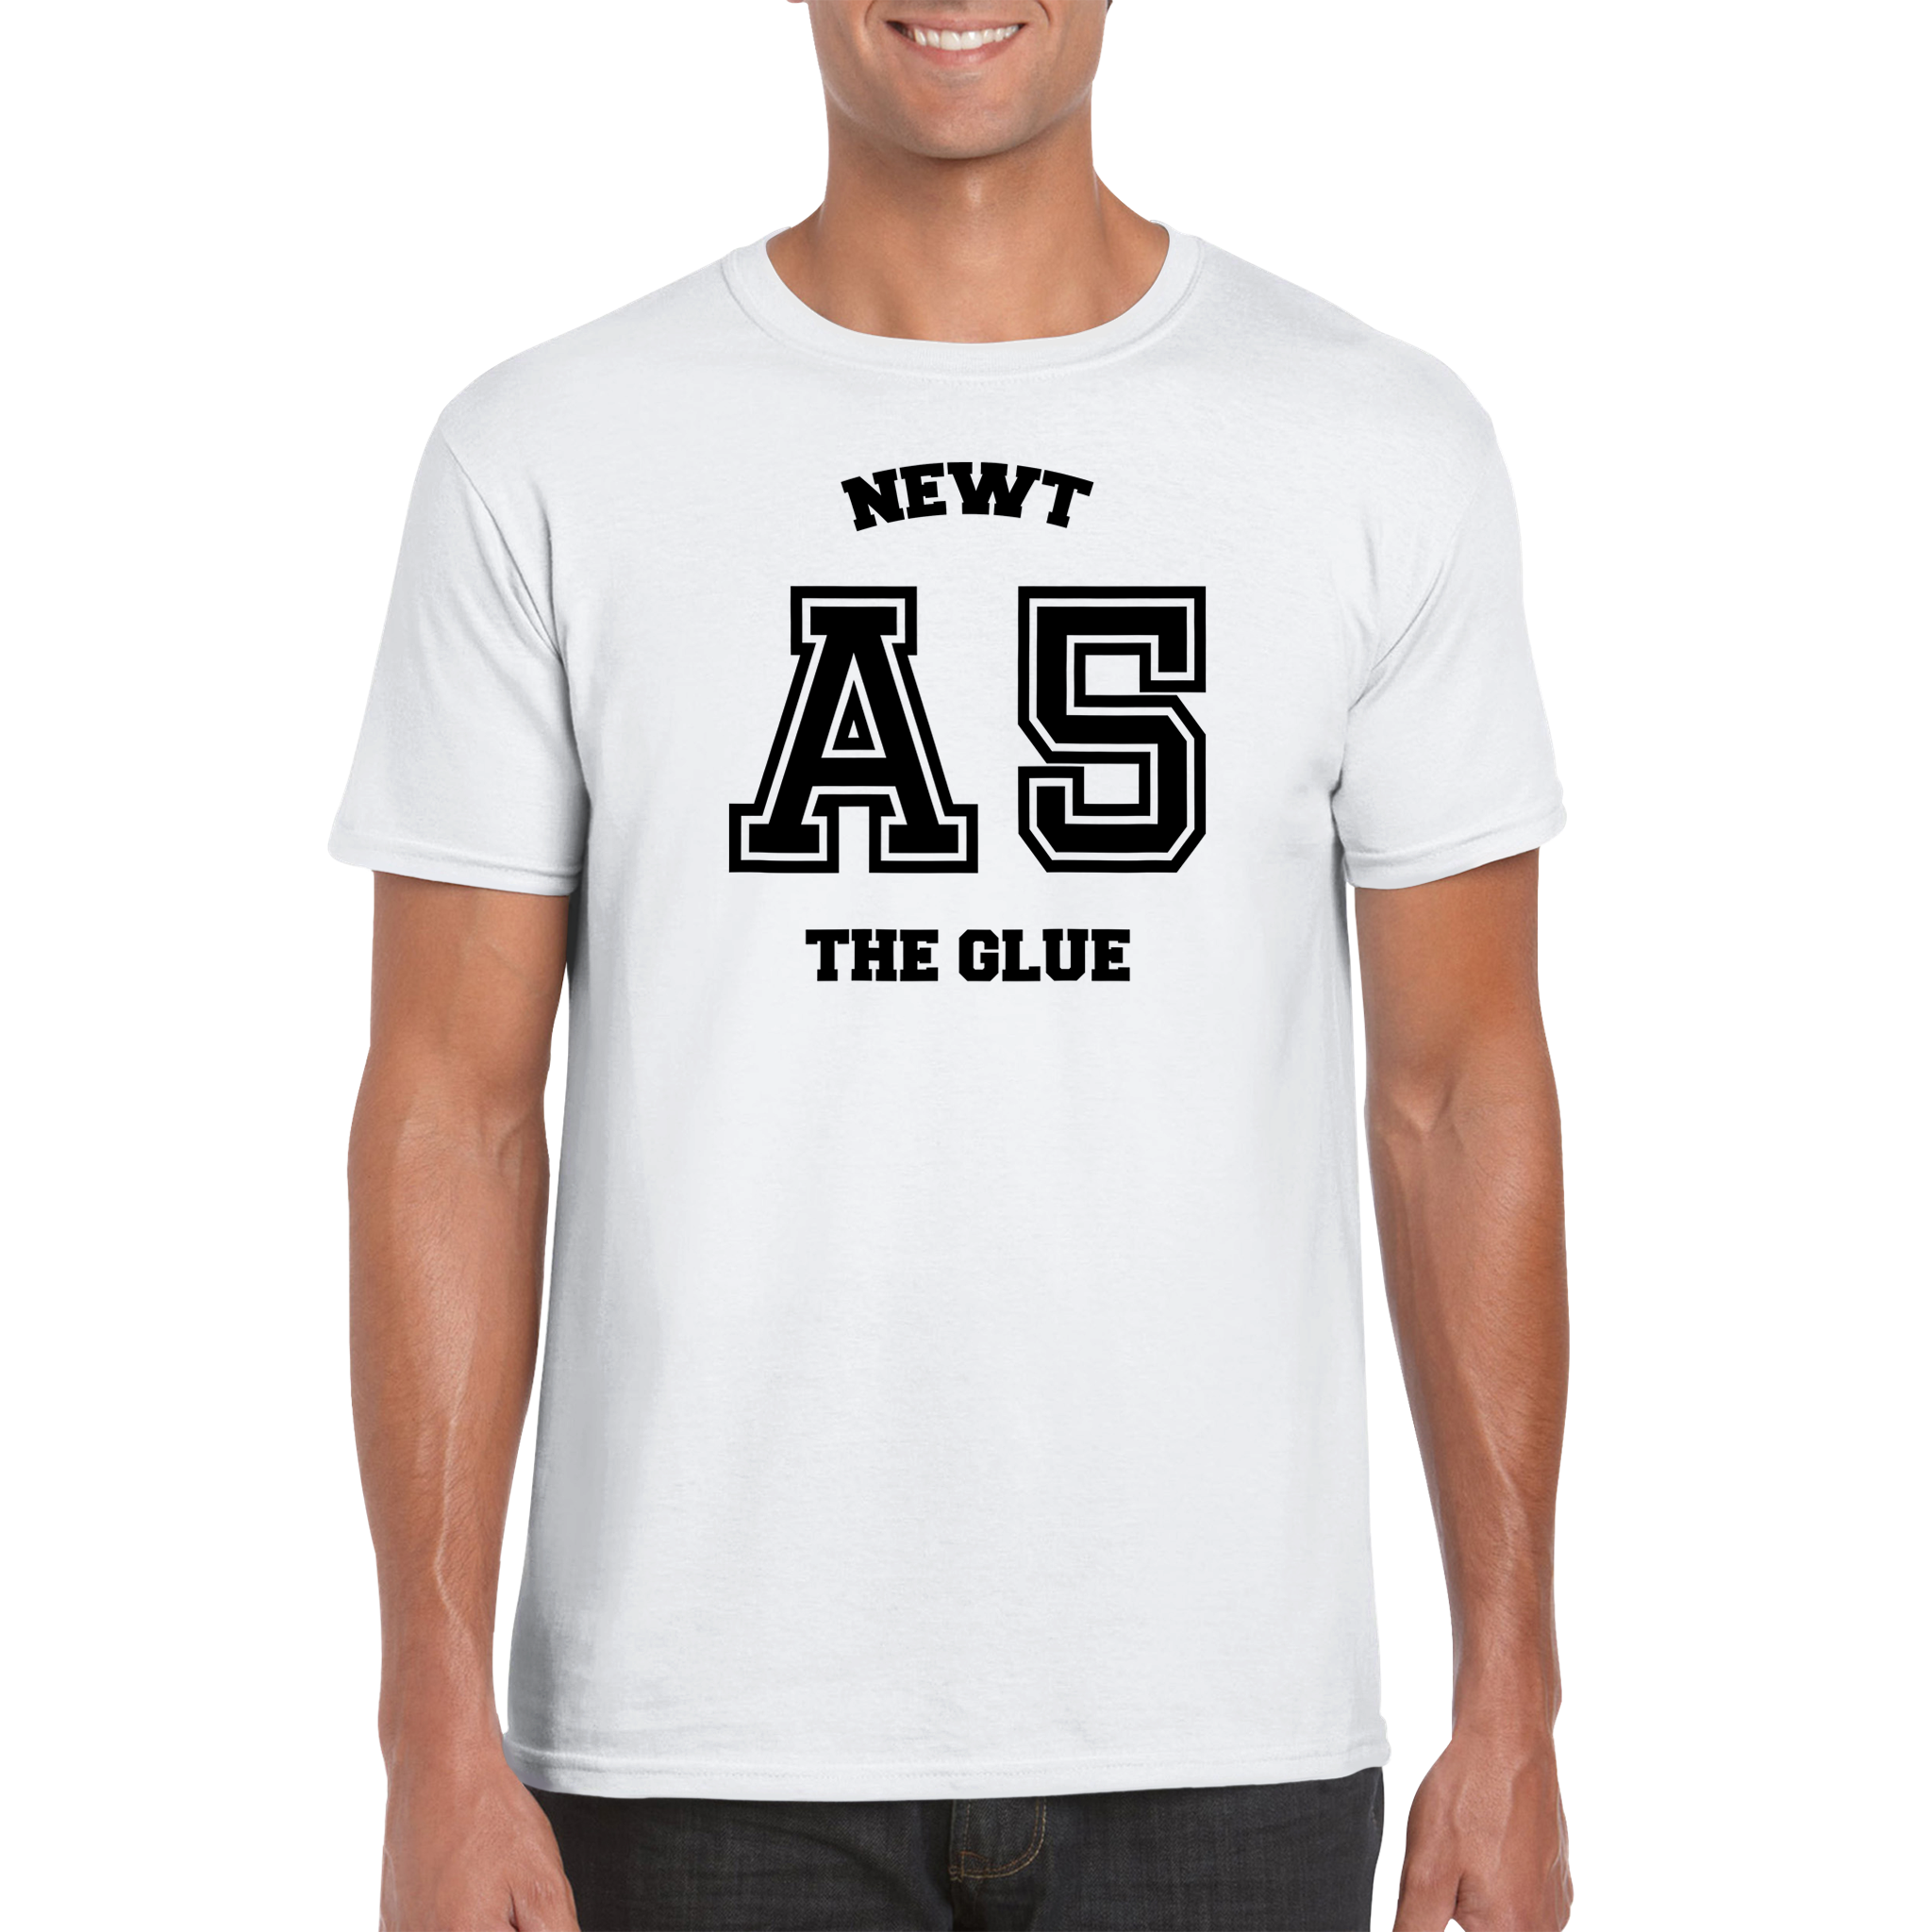 T-shirt Newt A5 - The Glue